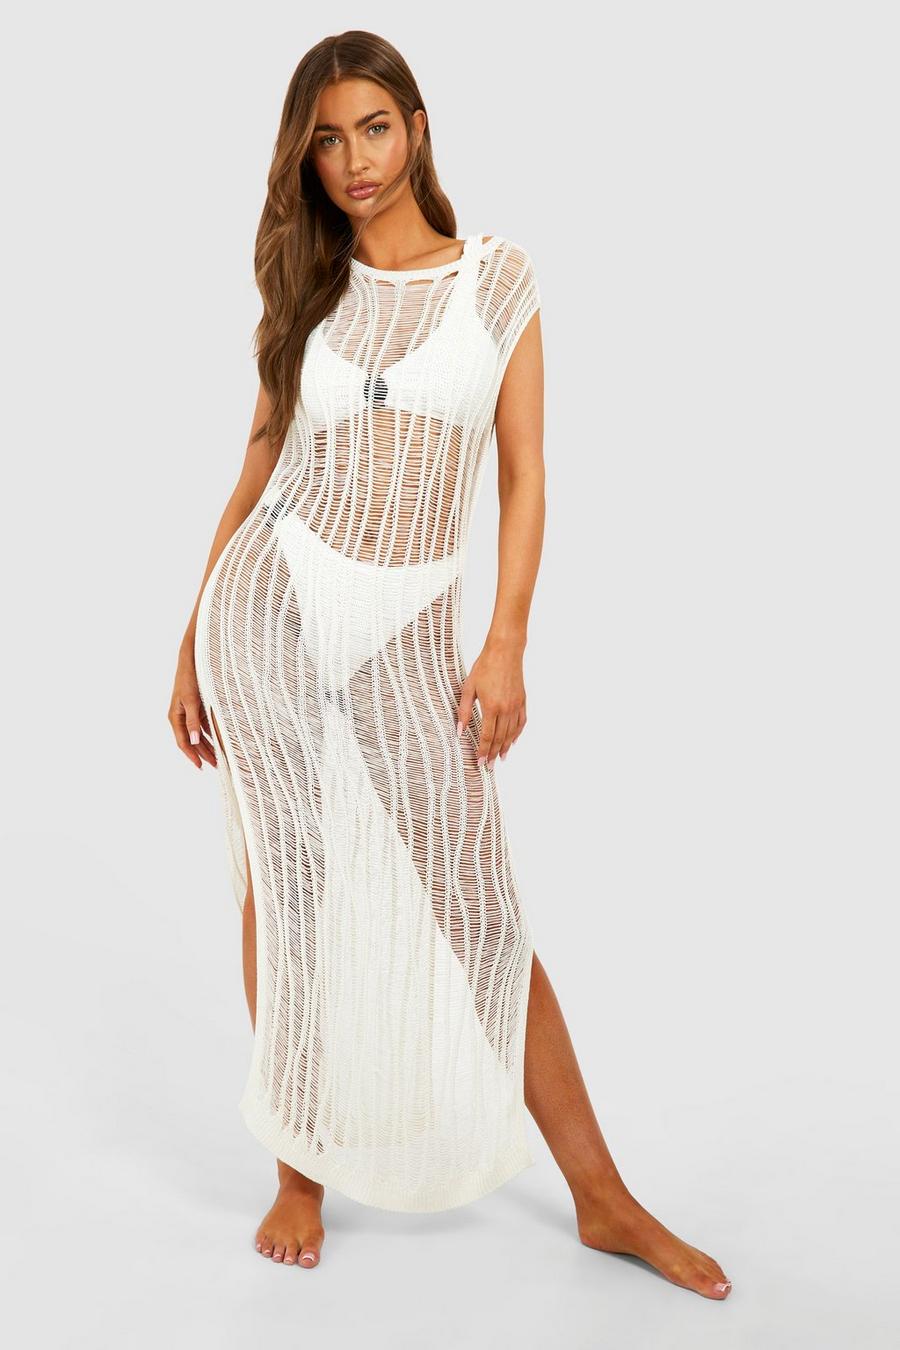 White See Through Crochet Cover Up Beach Dress with Slits – Beach